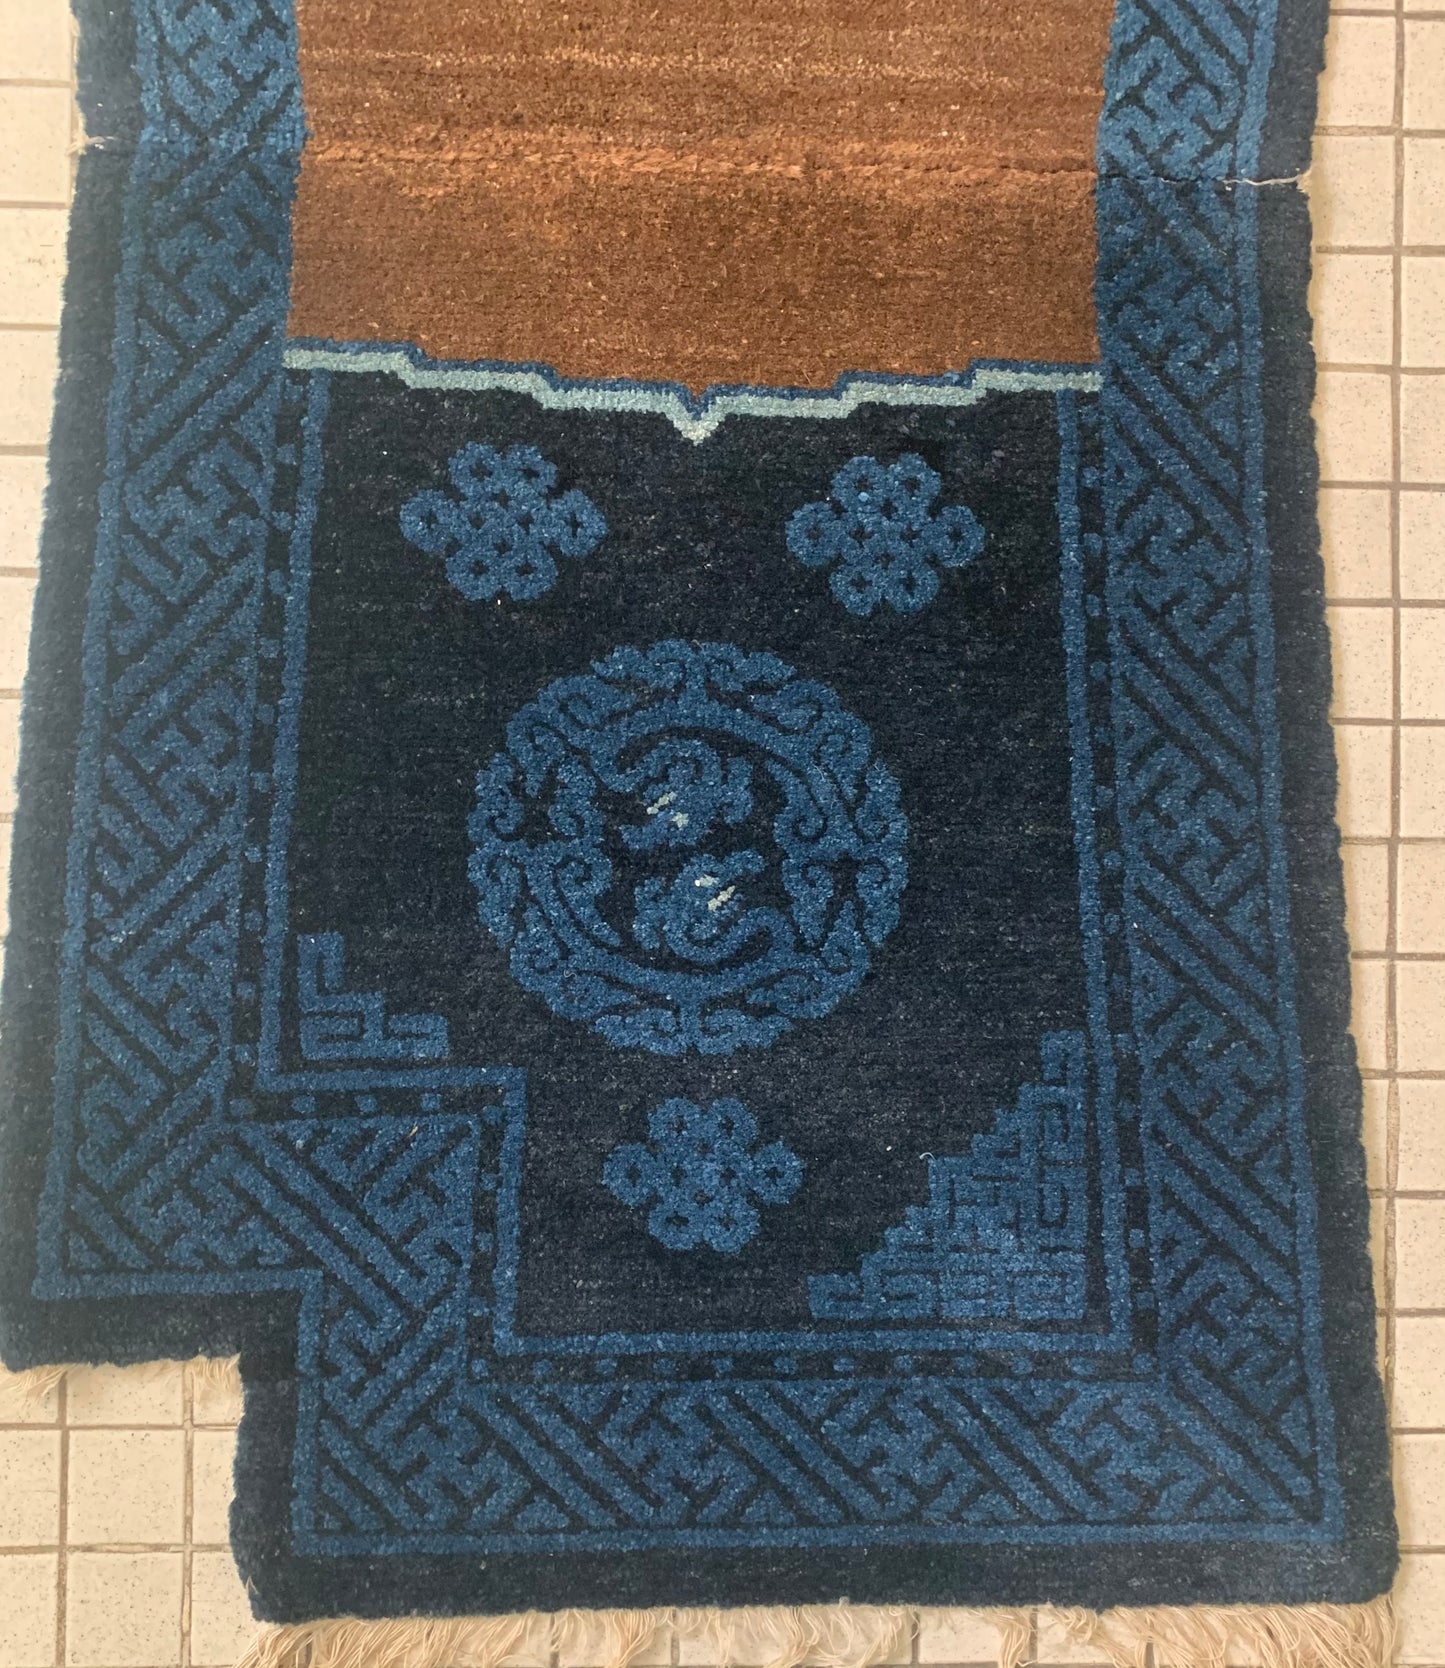 A vintage indigo saddle rug